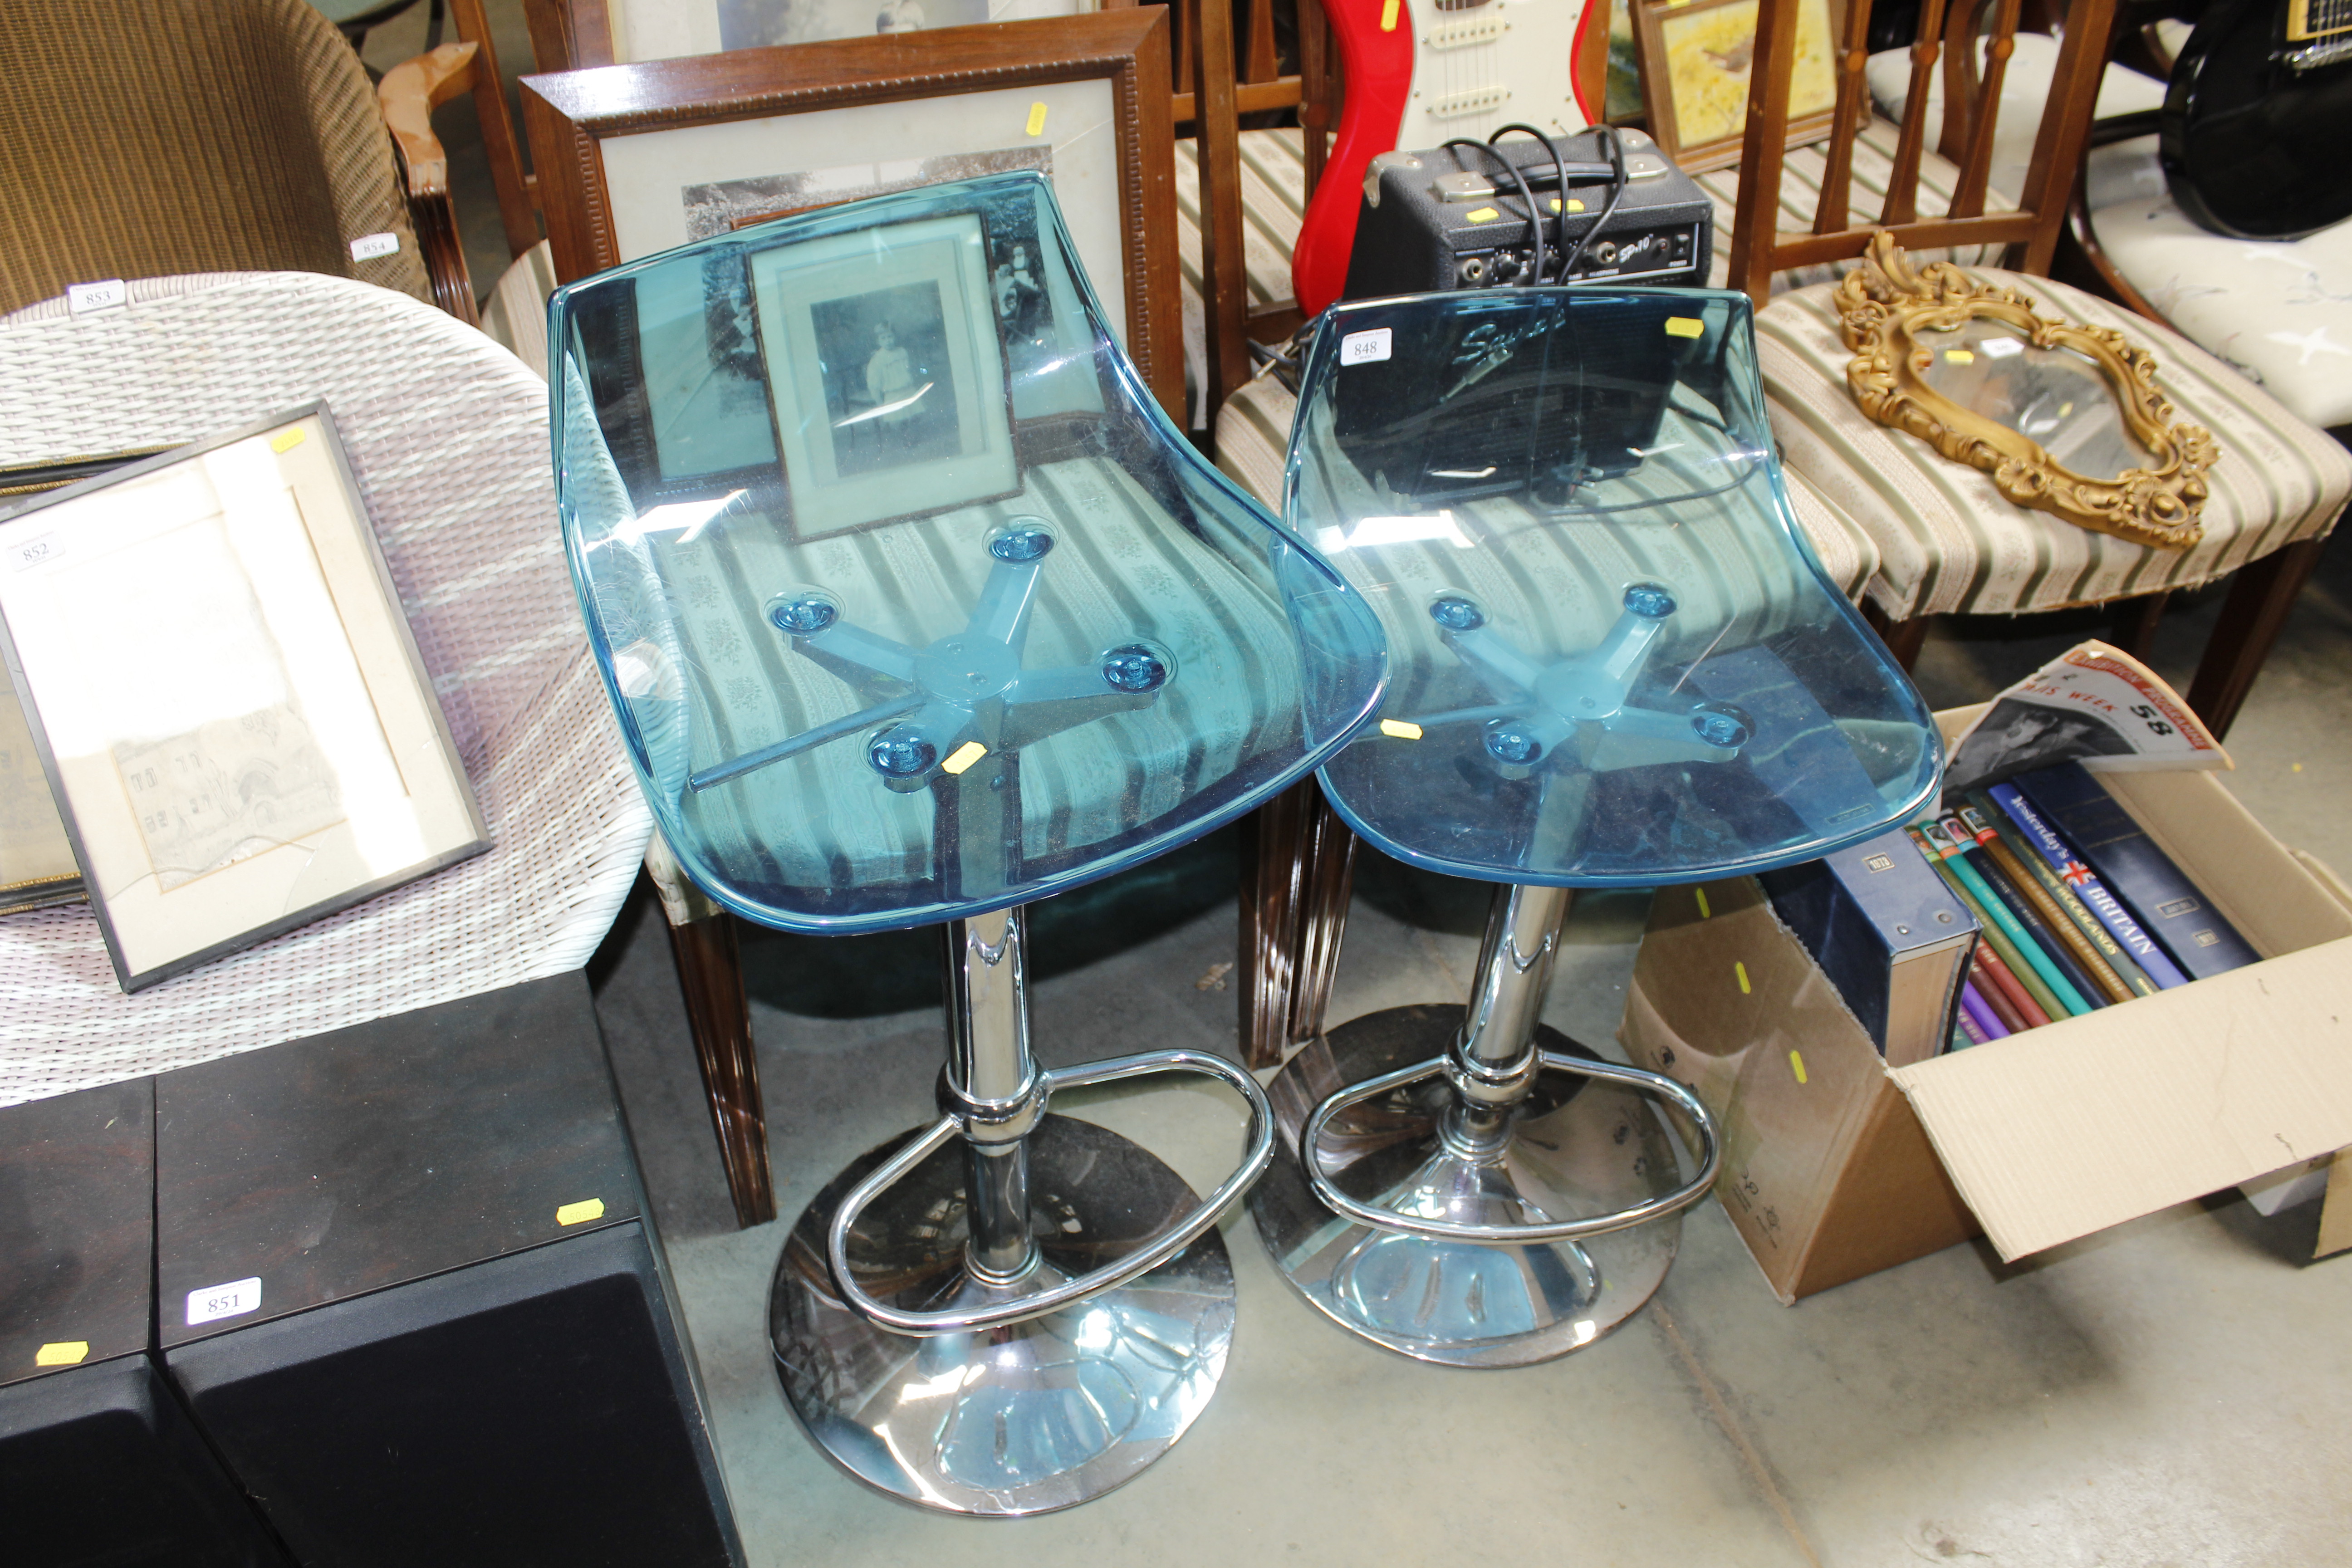 Two adjustable bar stools